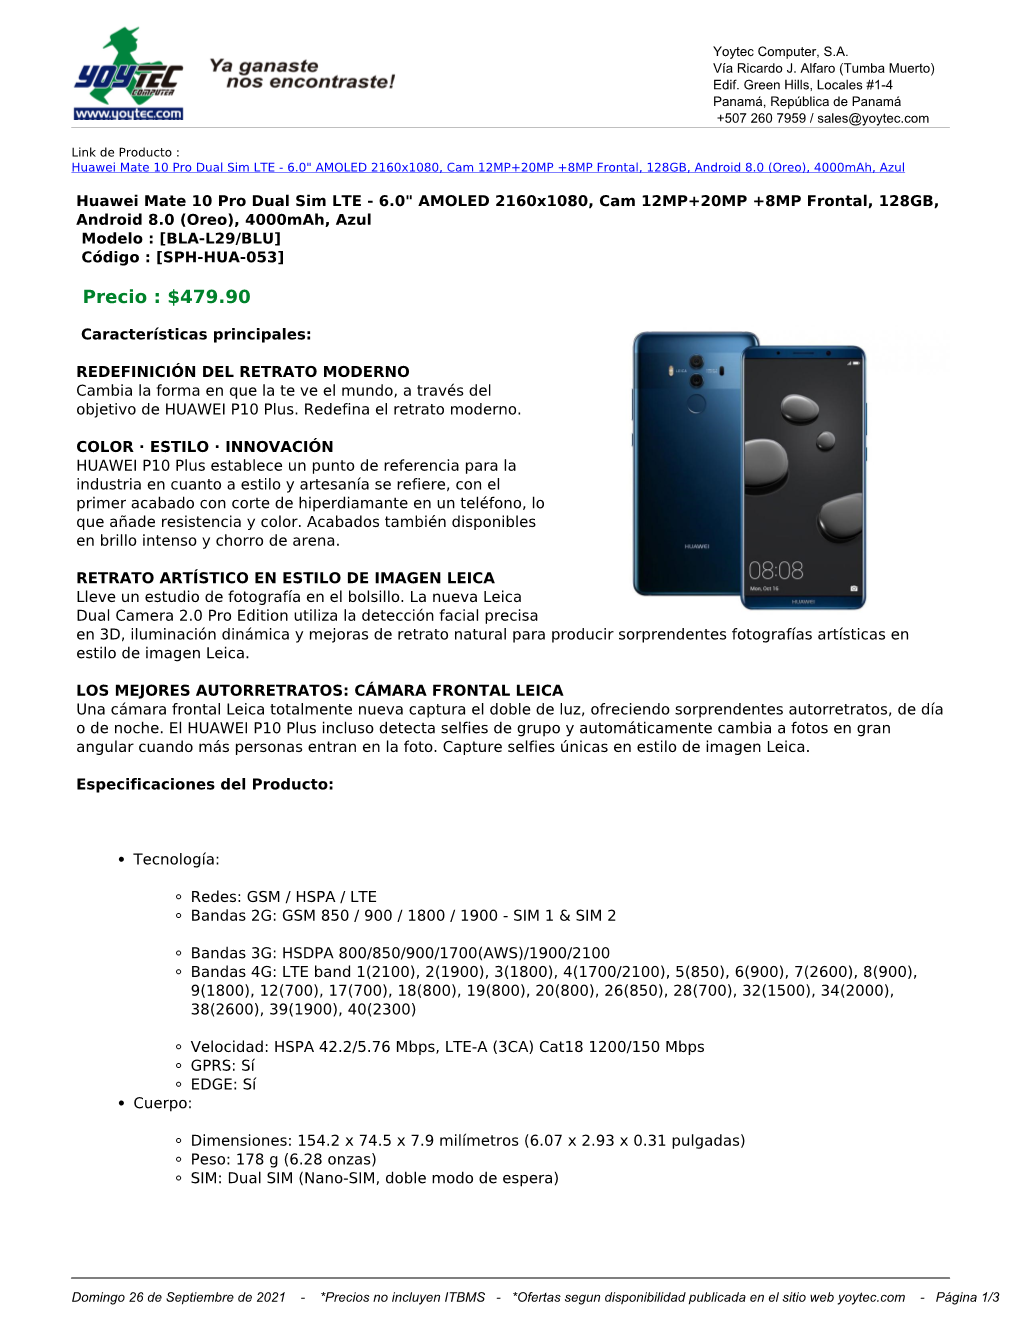 Huawei Mate 10 Pro Dual Sim LTE - 6.0" AMOLED 2160X1080, Cam 12MP+20MP +8MP Frontal, 128GB, Android 8.0 (Oreo), 4000Mah, Azul